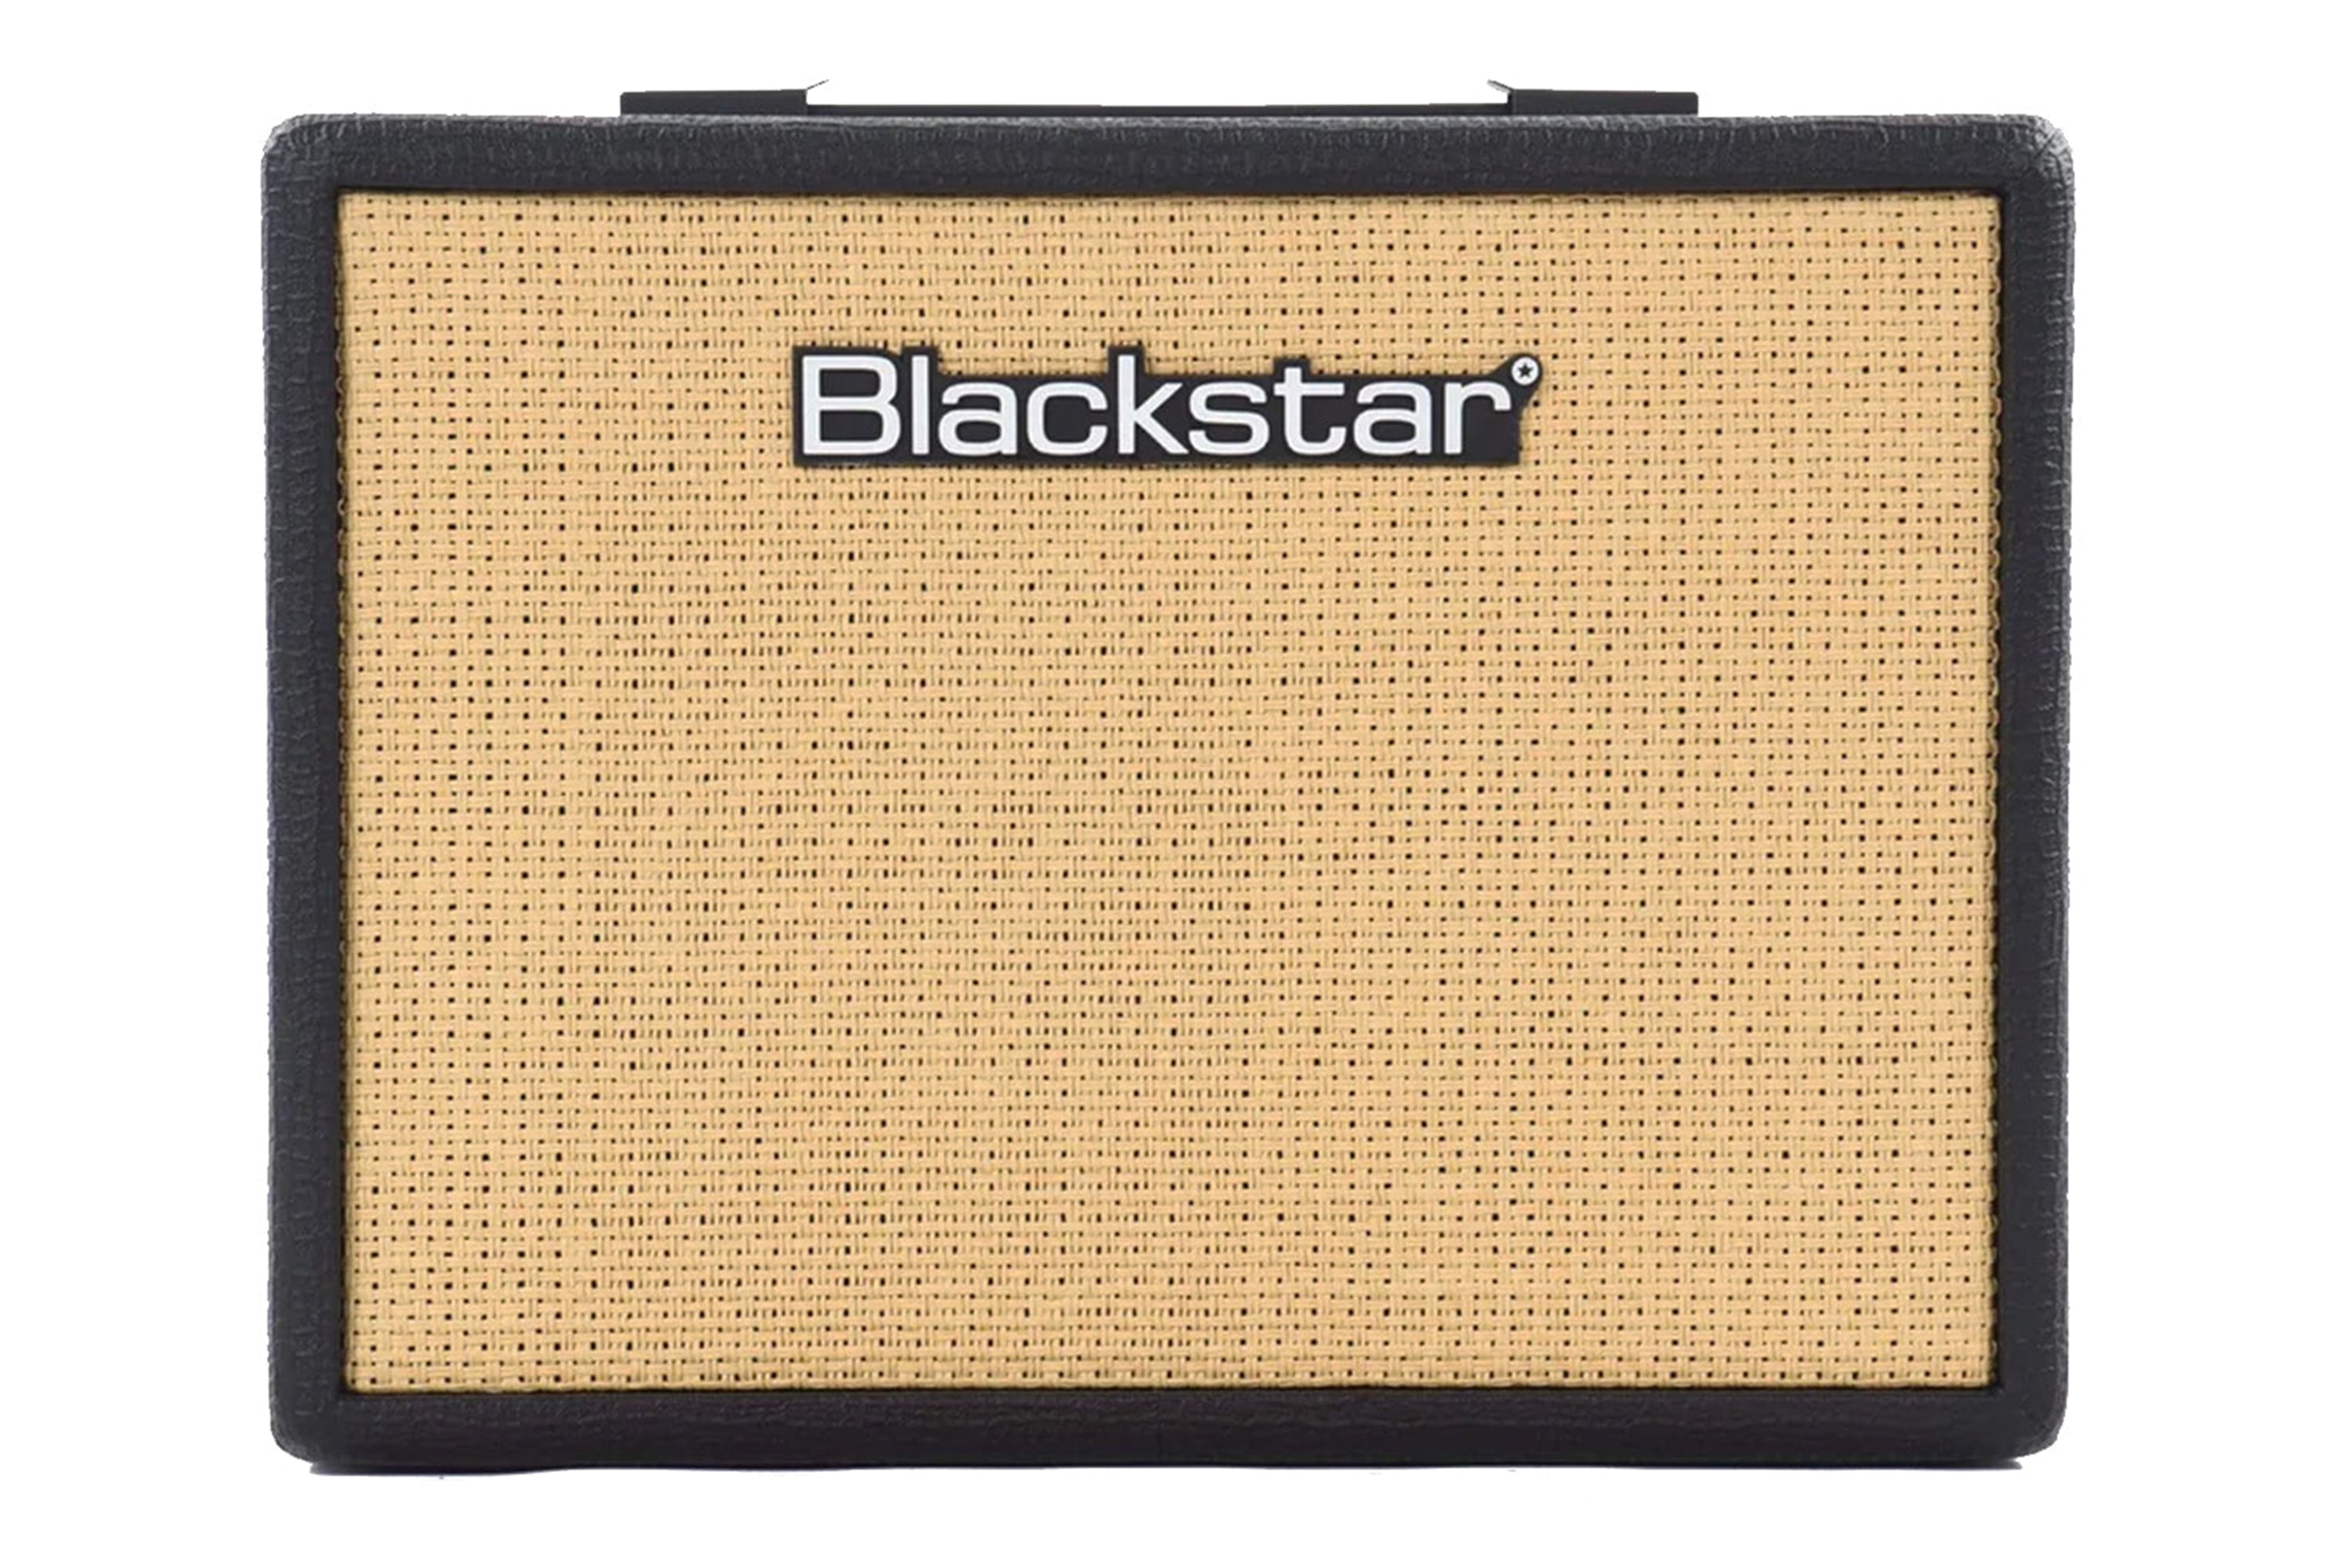 Blackstar Debut 15E 15-Watt Combo Practice Amp with FX - Black - Open Box